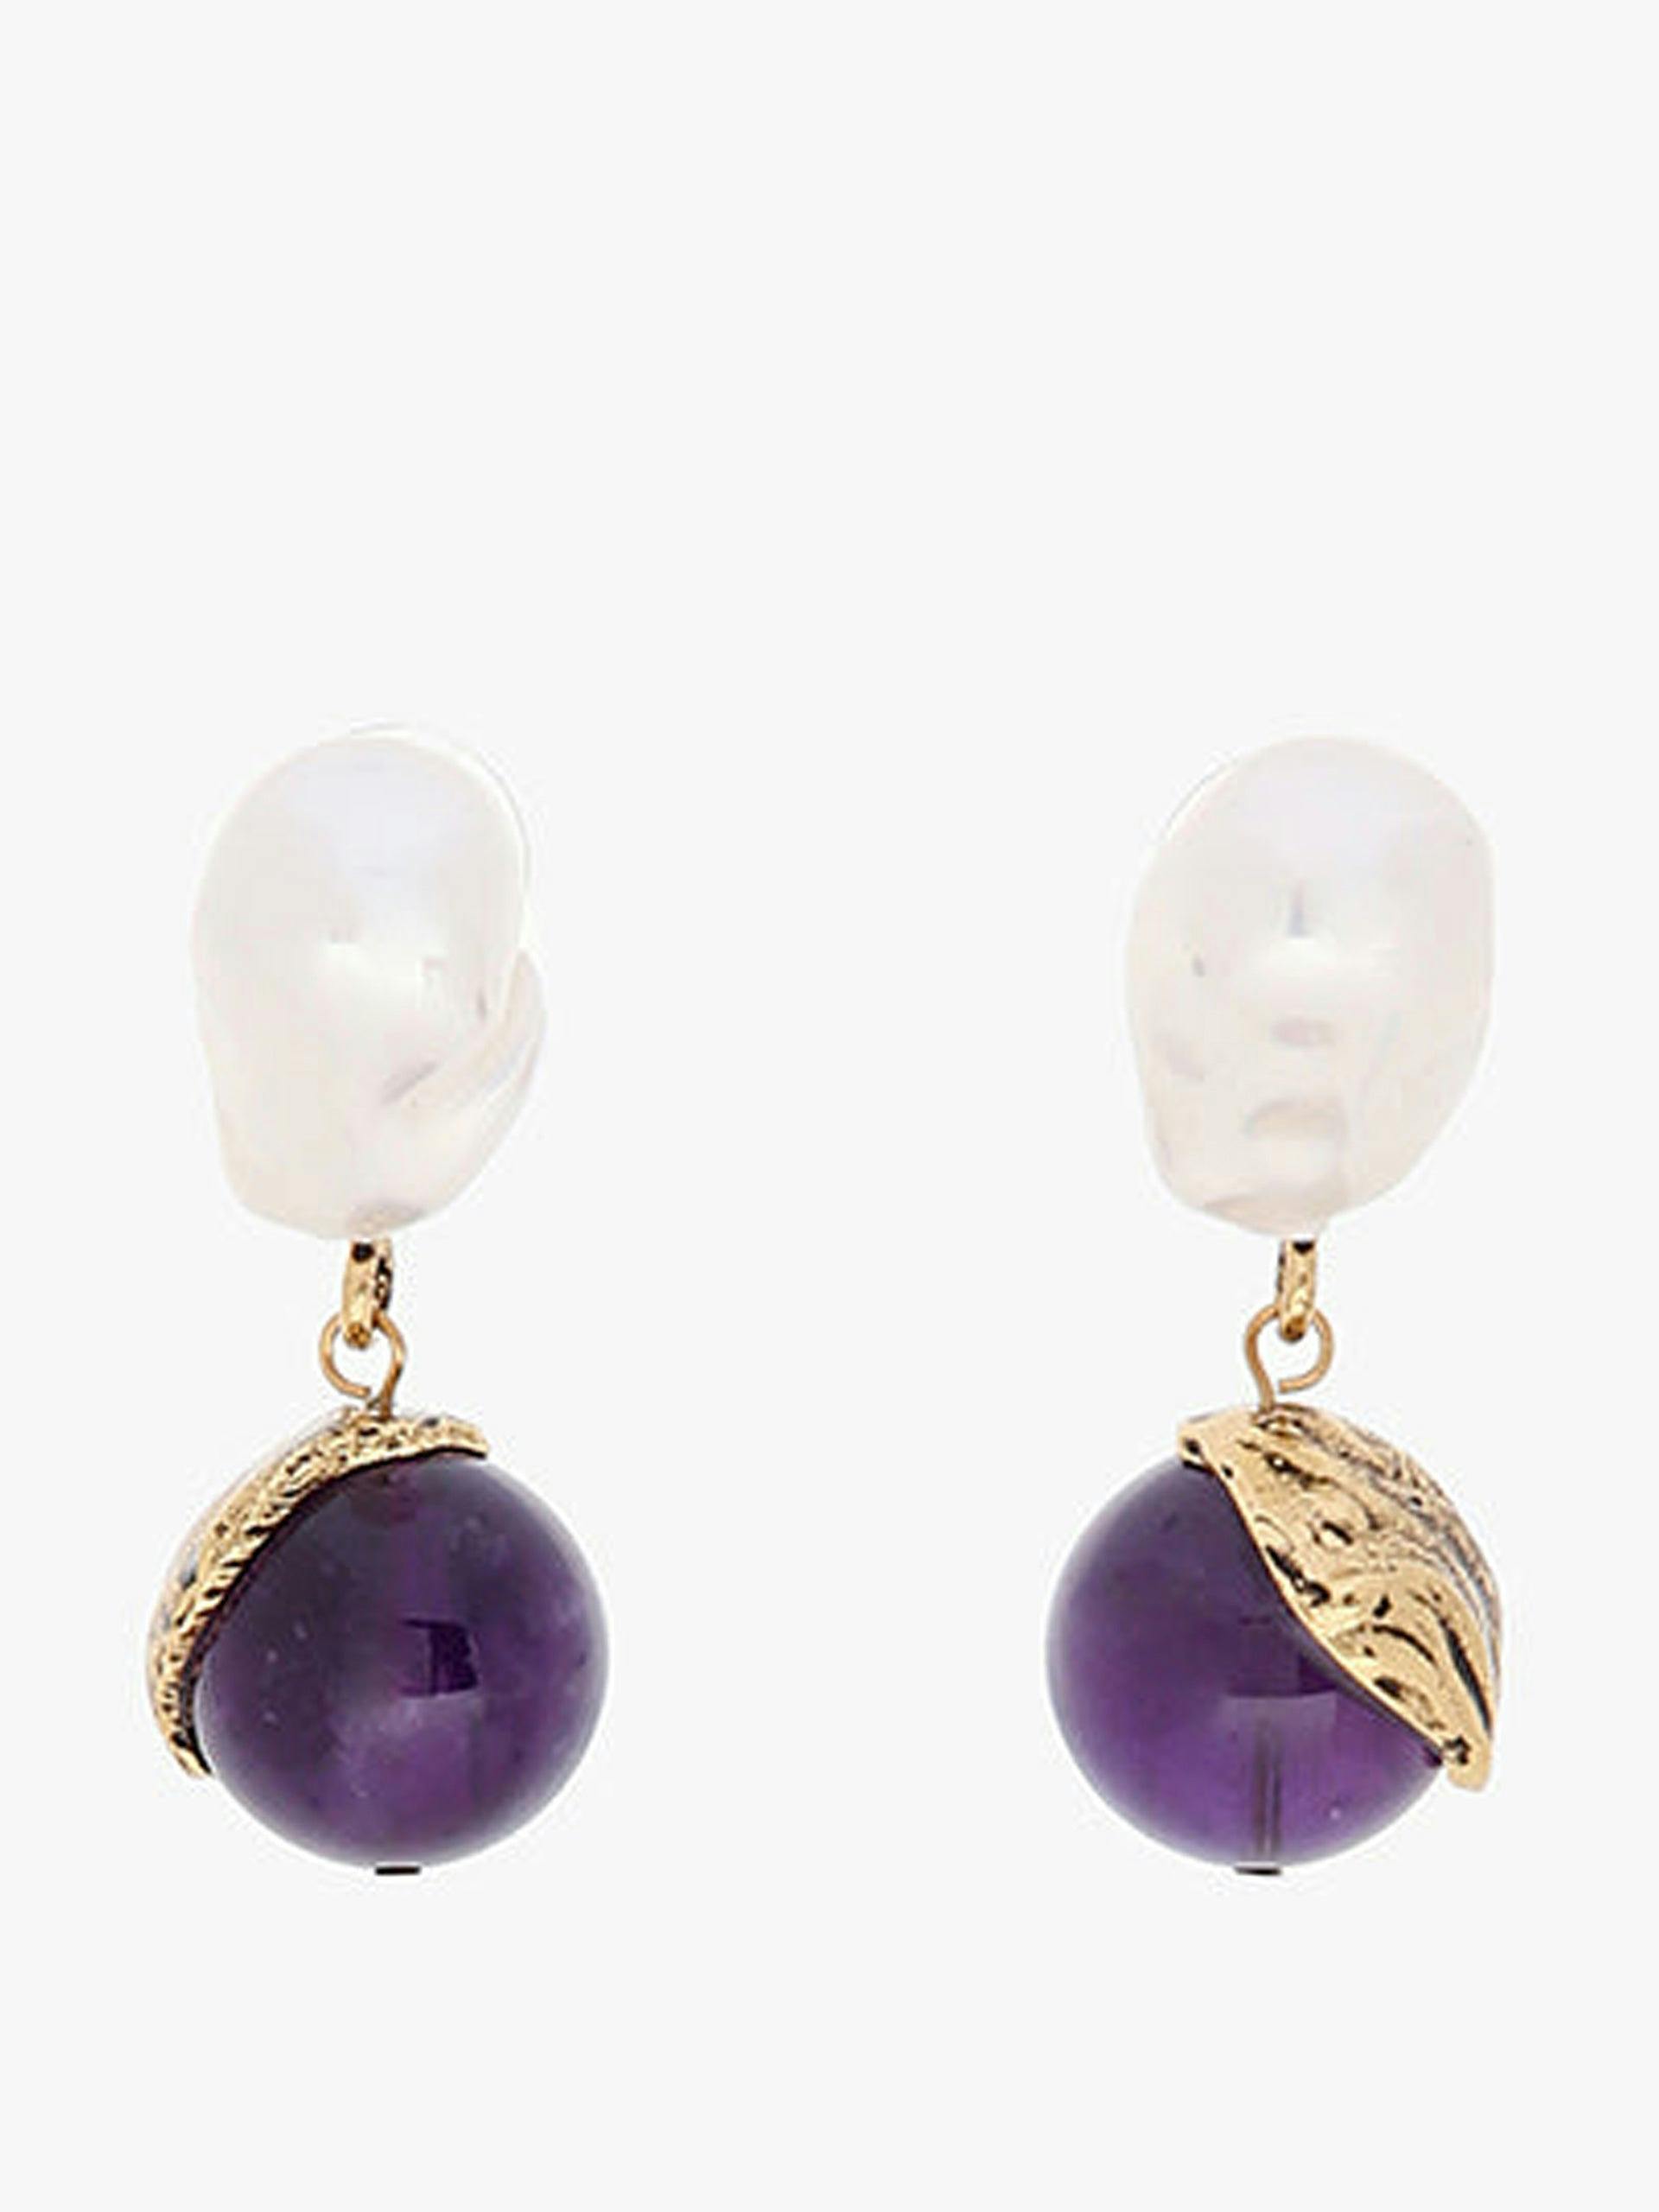 Amethyst and pearl gold stud earrings